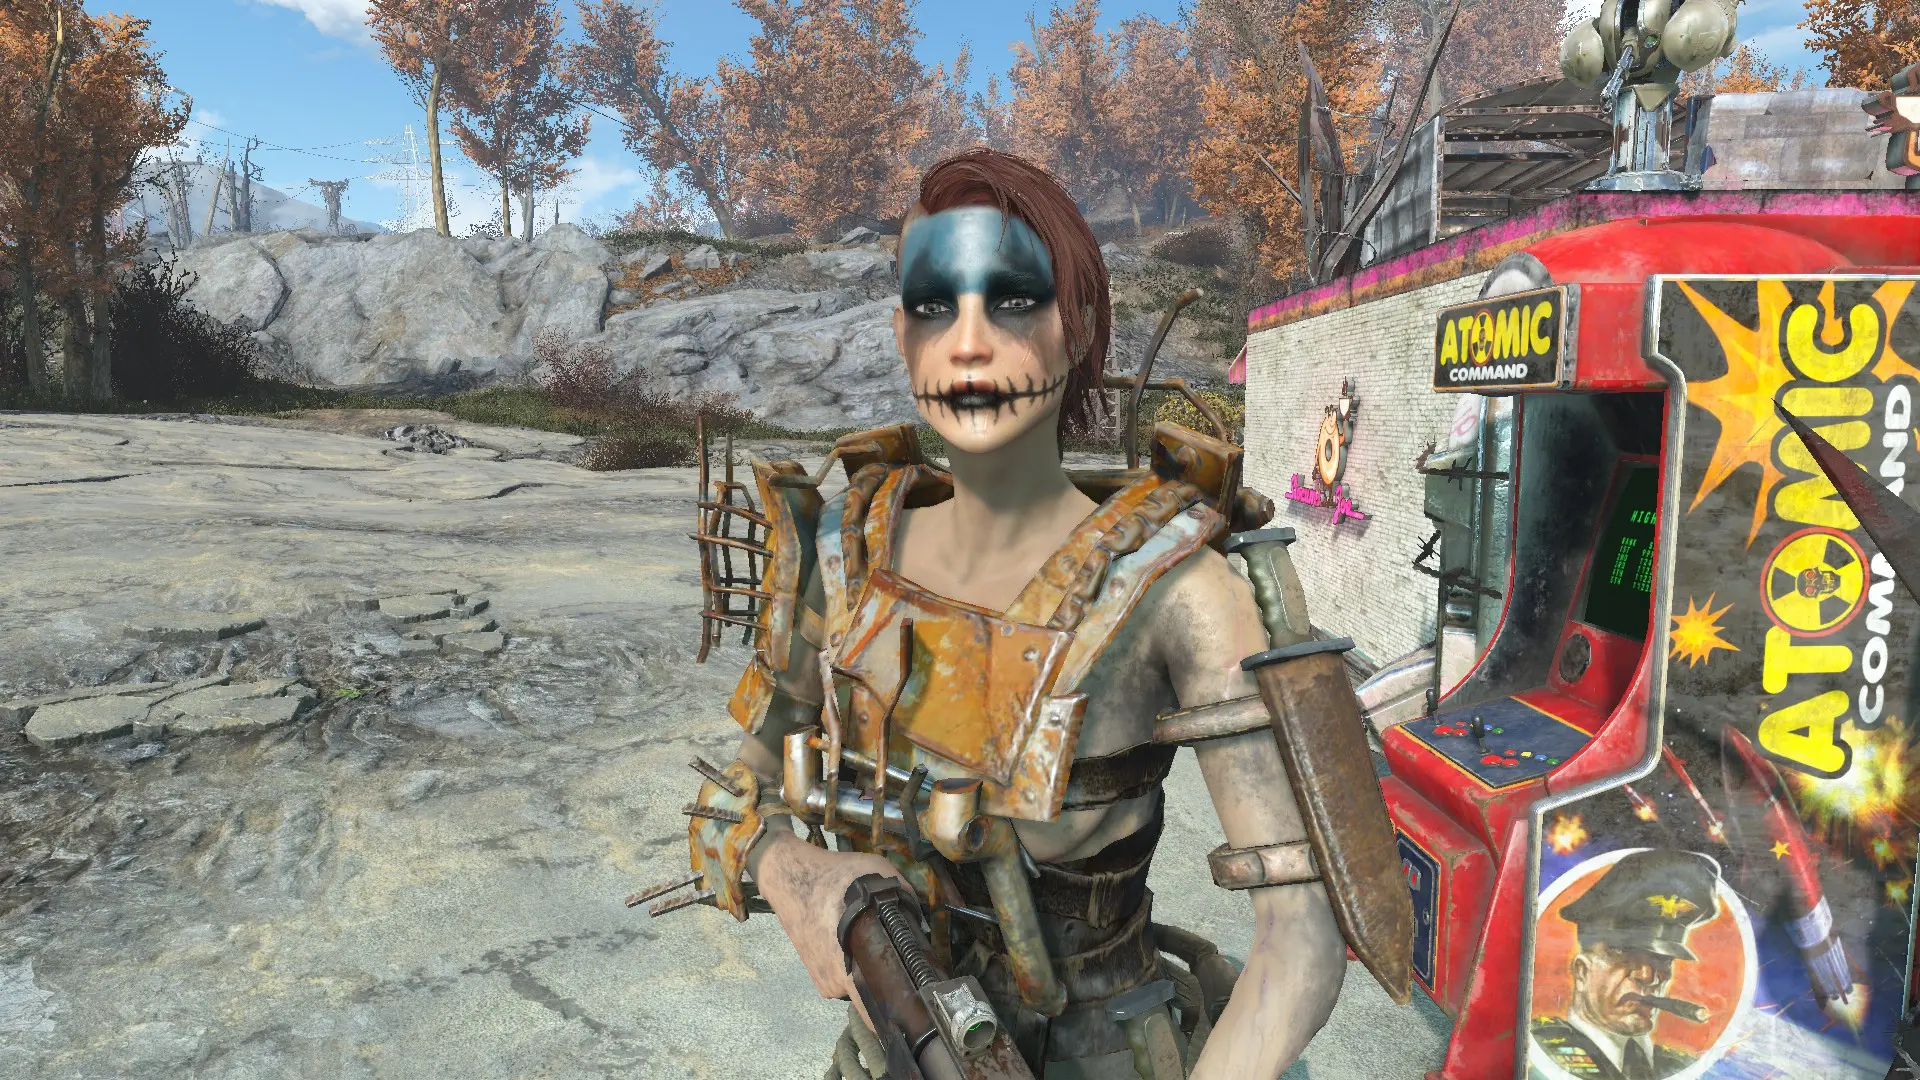 Hot Mama Disciple Girls Of Nuka World At Fallout 4 Nexus Mods And Community